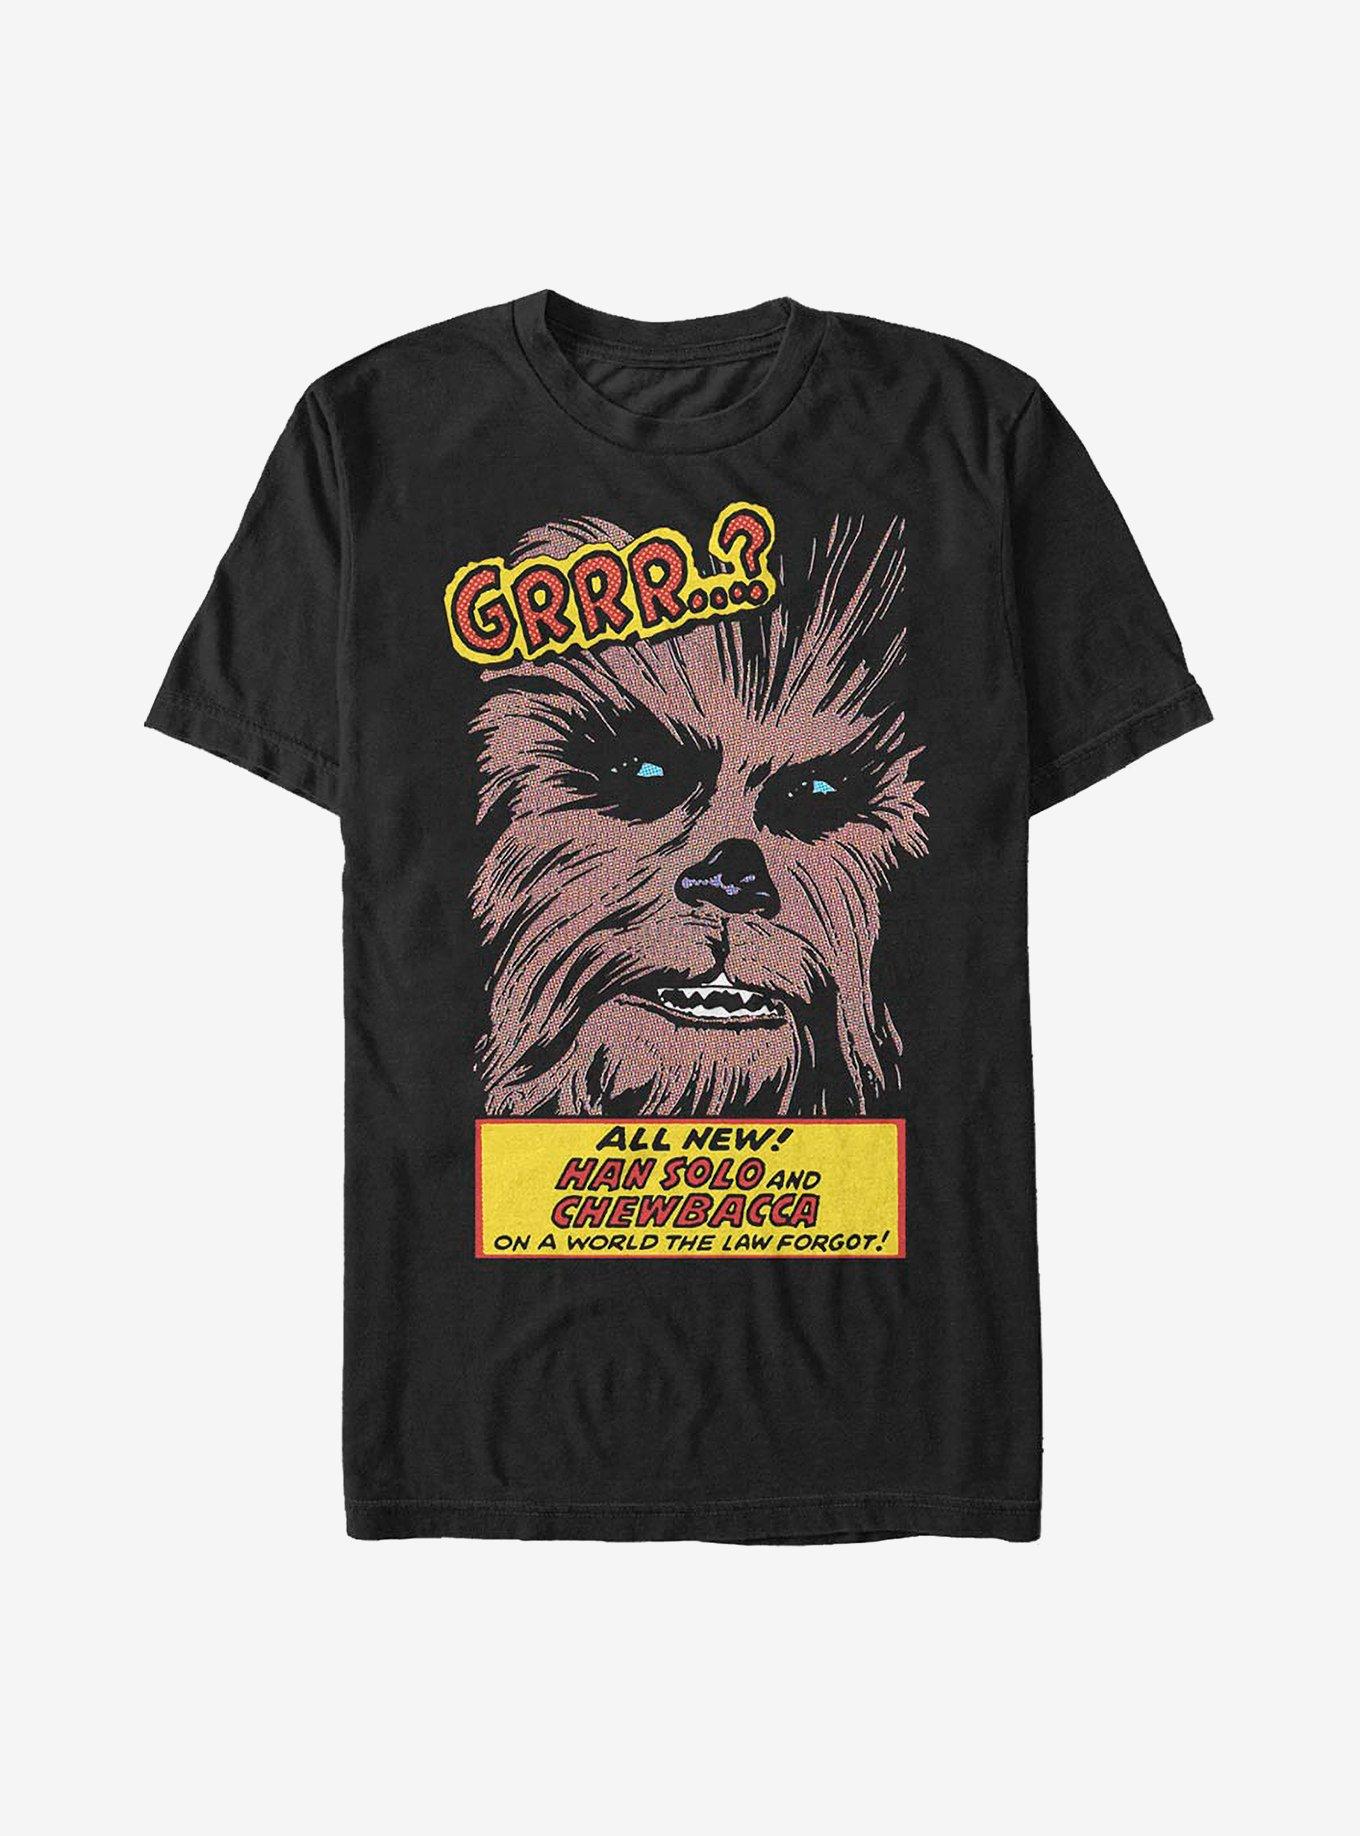 Star Wars Han Solo And Chewbacca Comic T-Shirt